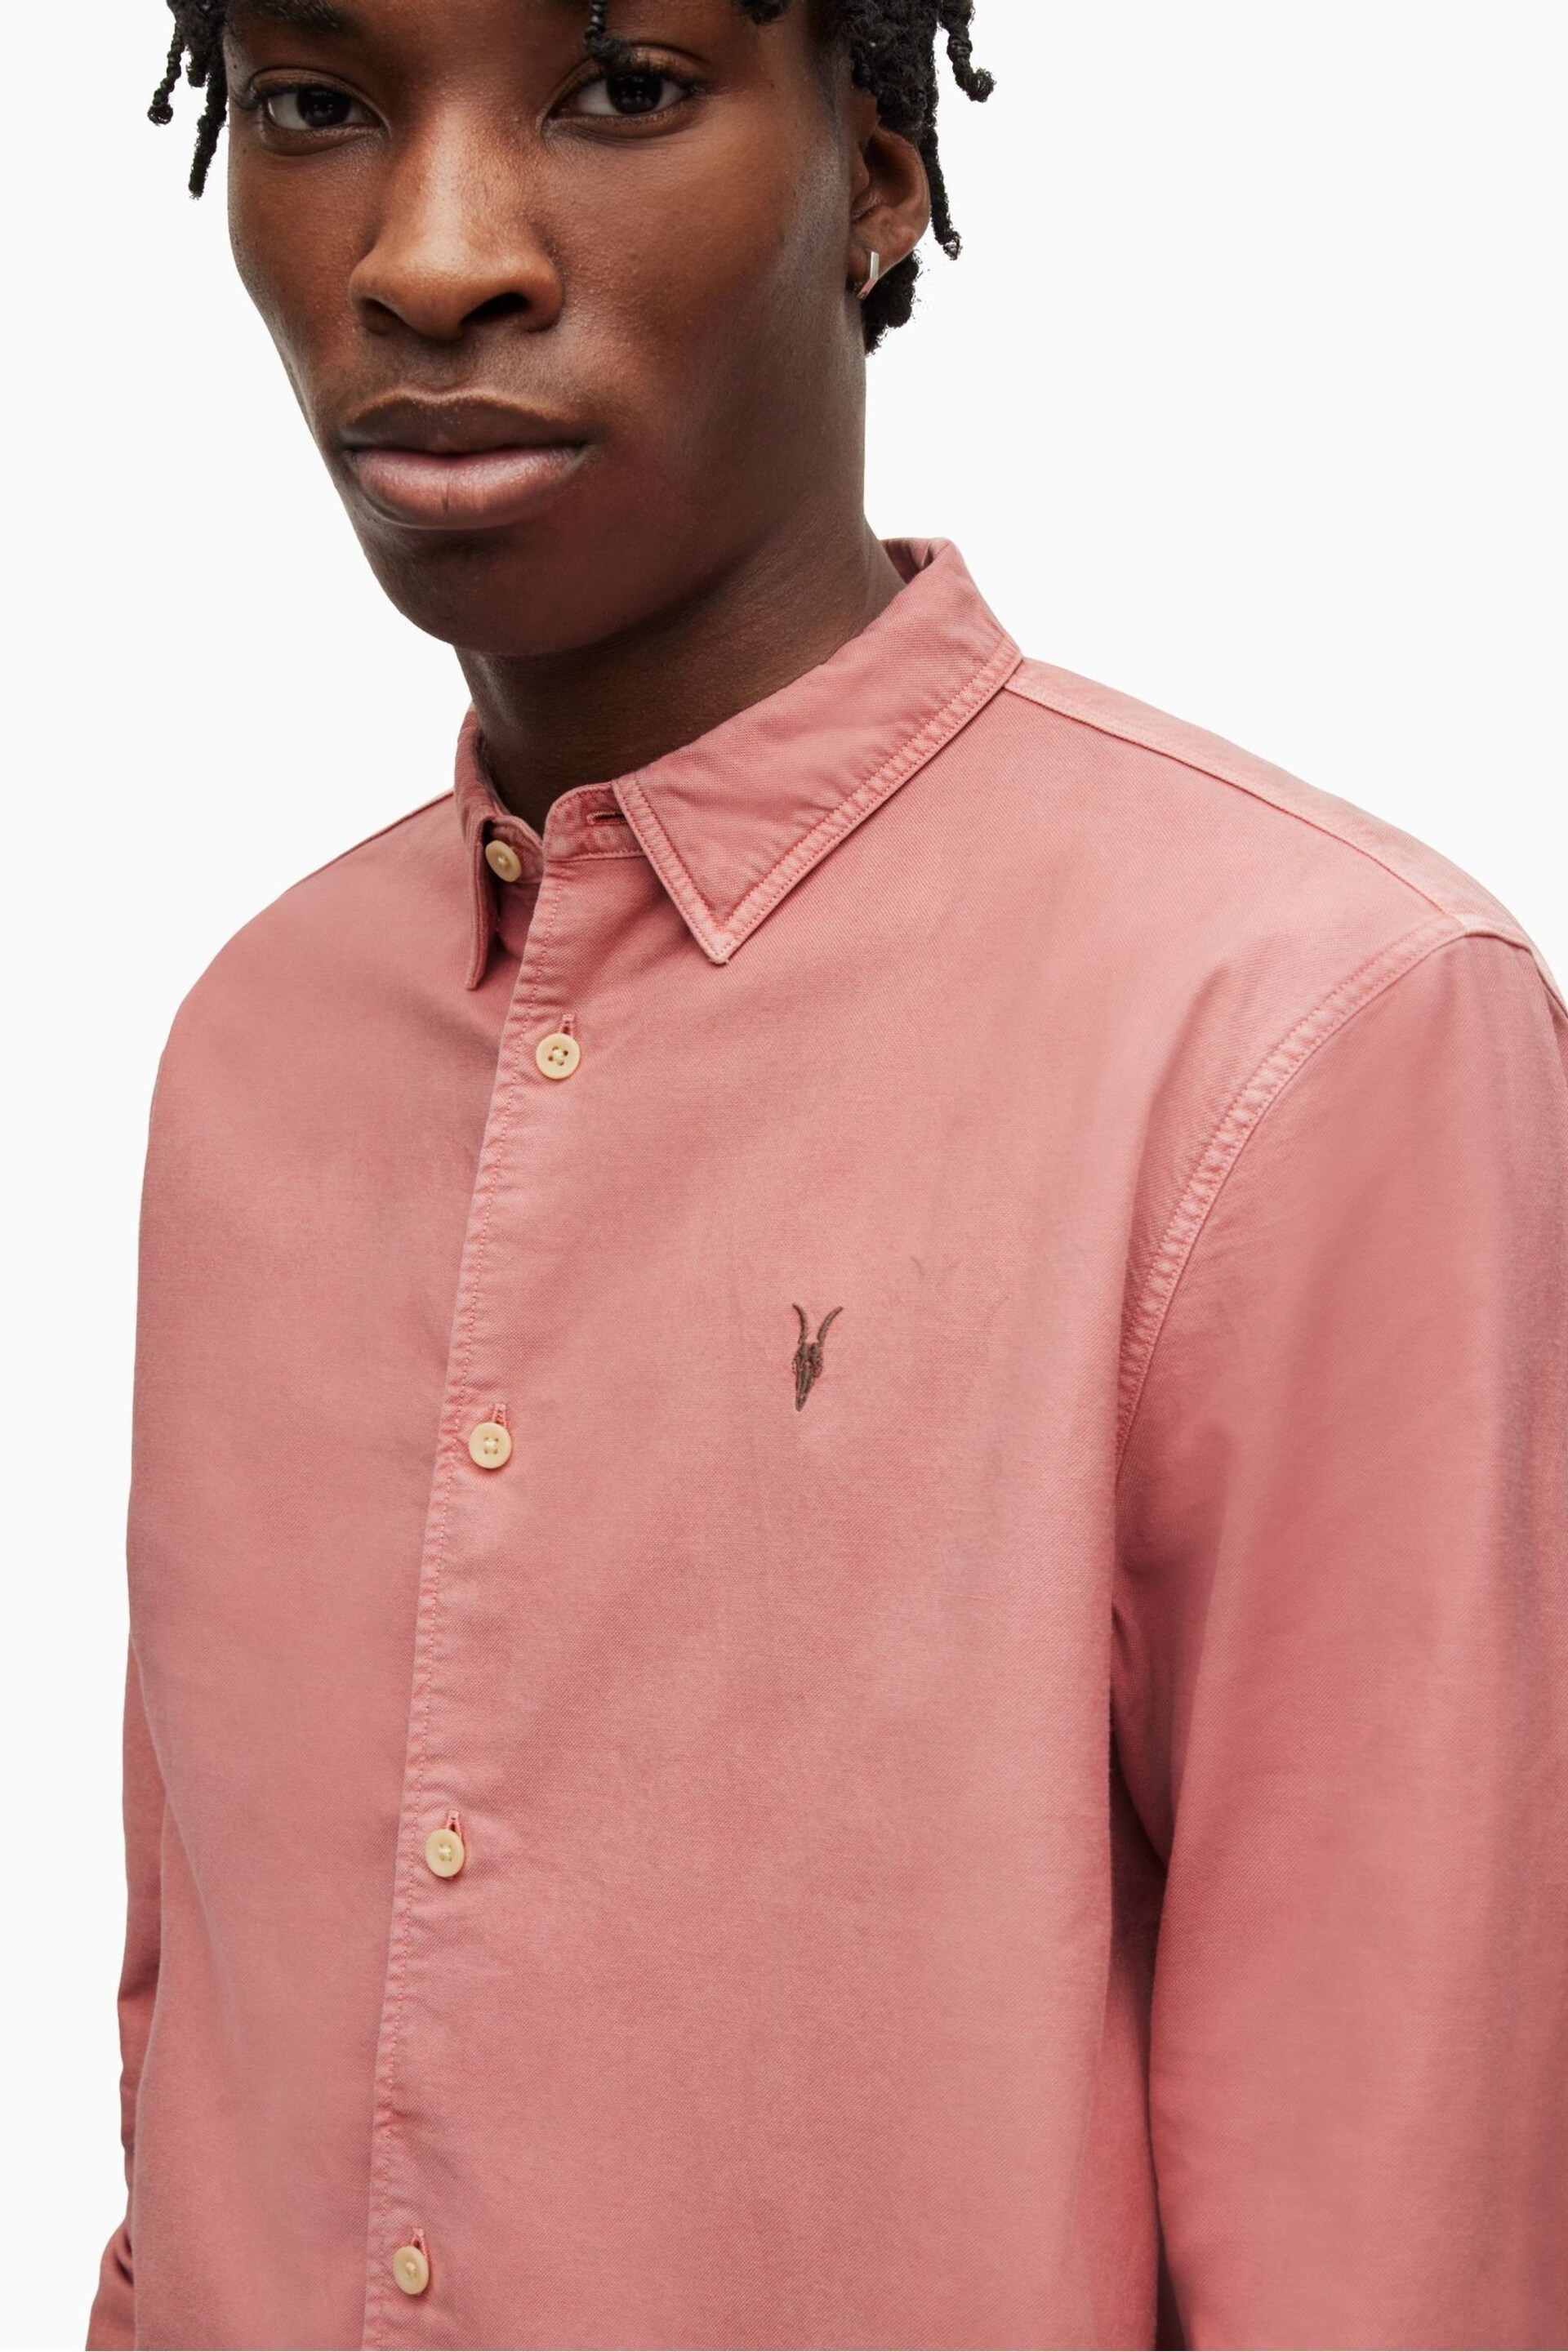 AllSaints Pink Hermosa Shirt - Image 4 of 7